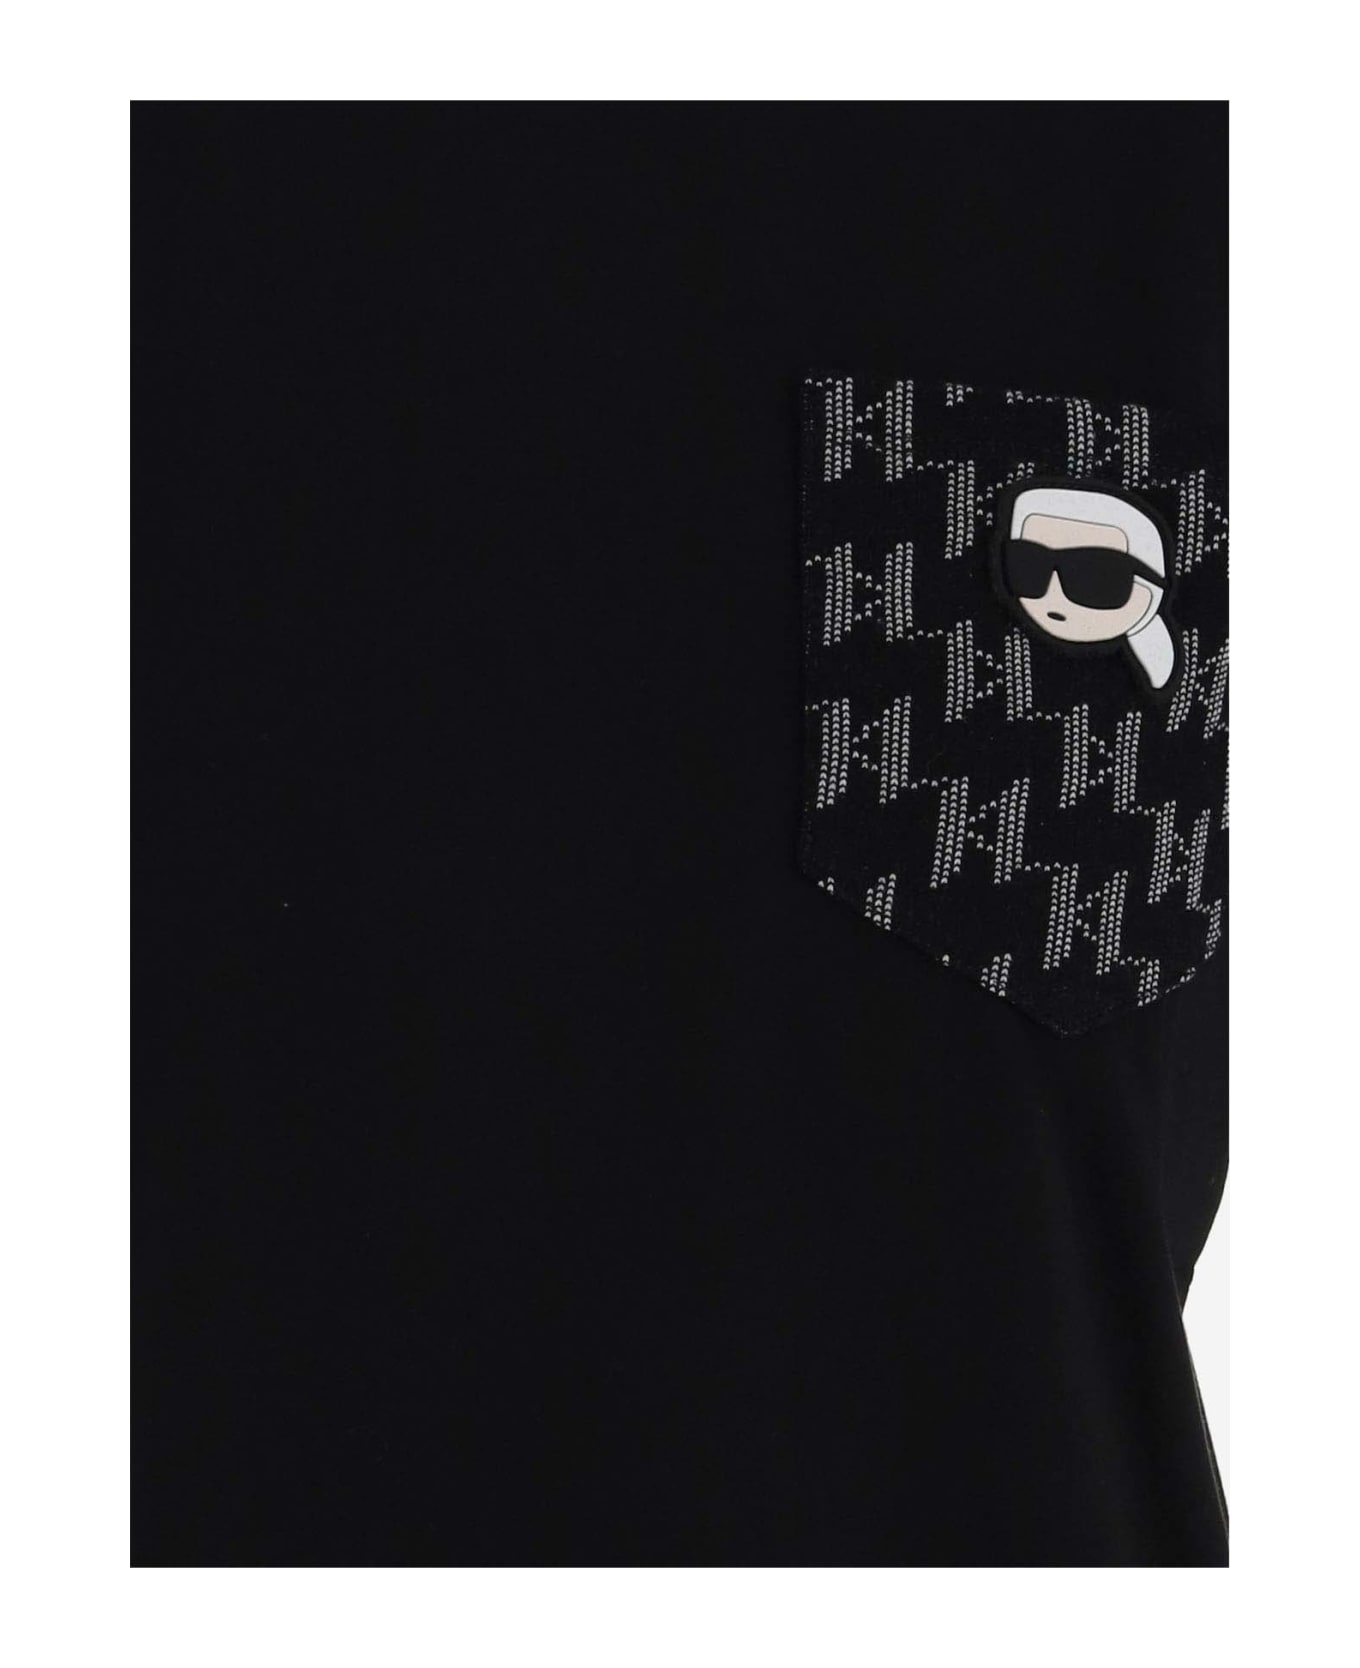 Karl Lagerfeld Cotton T-shirt With Logo - Black